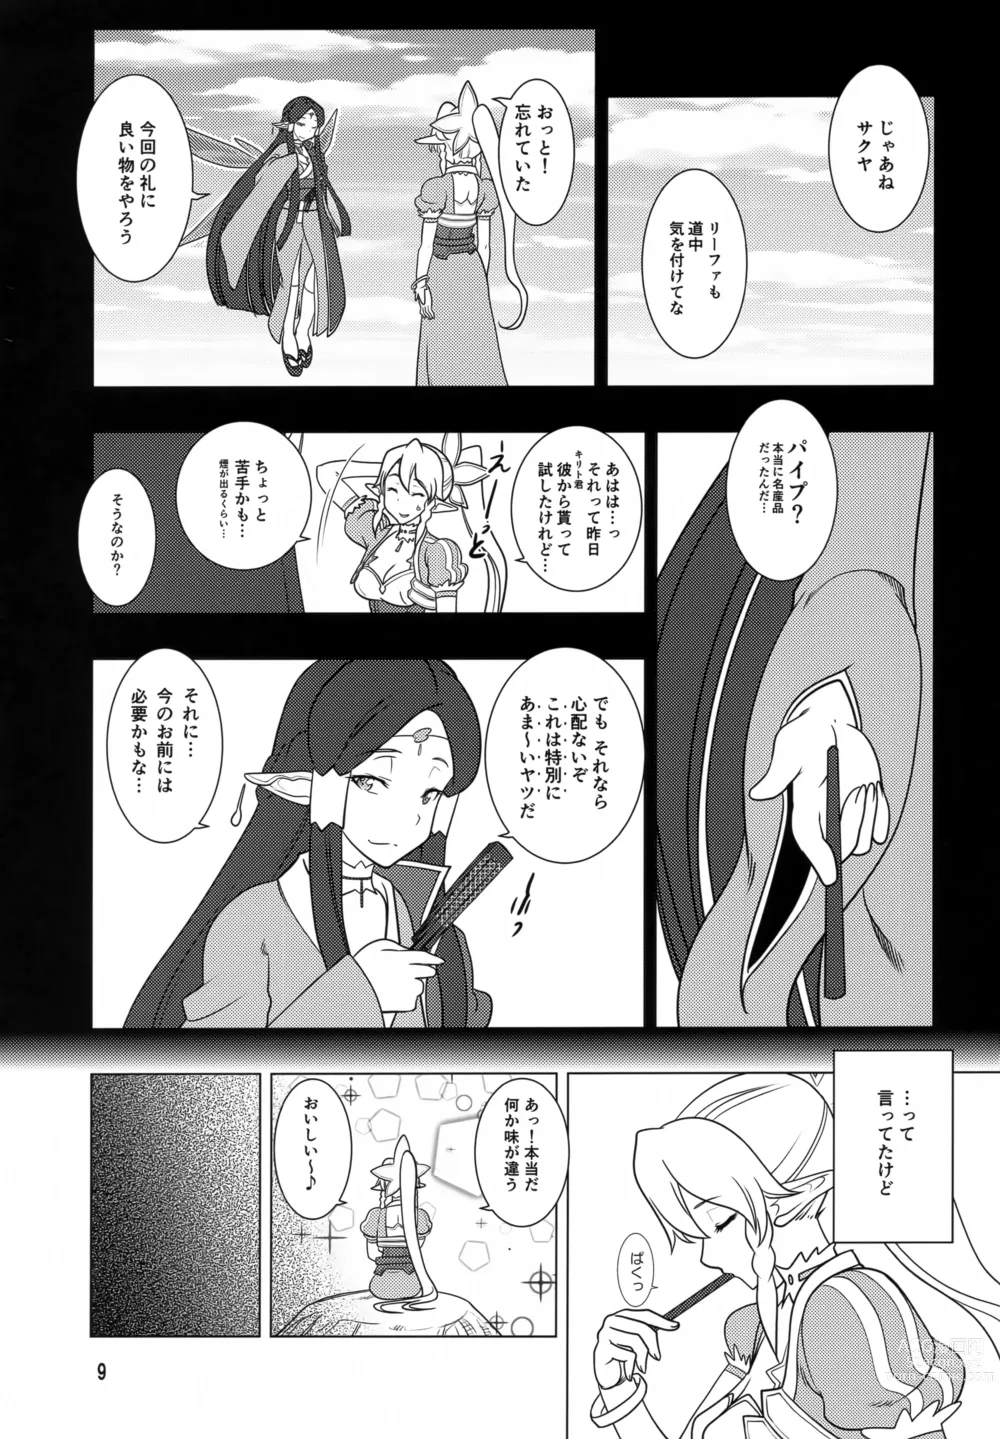 Page 8 of doujinshi Rifatto